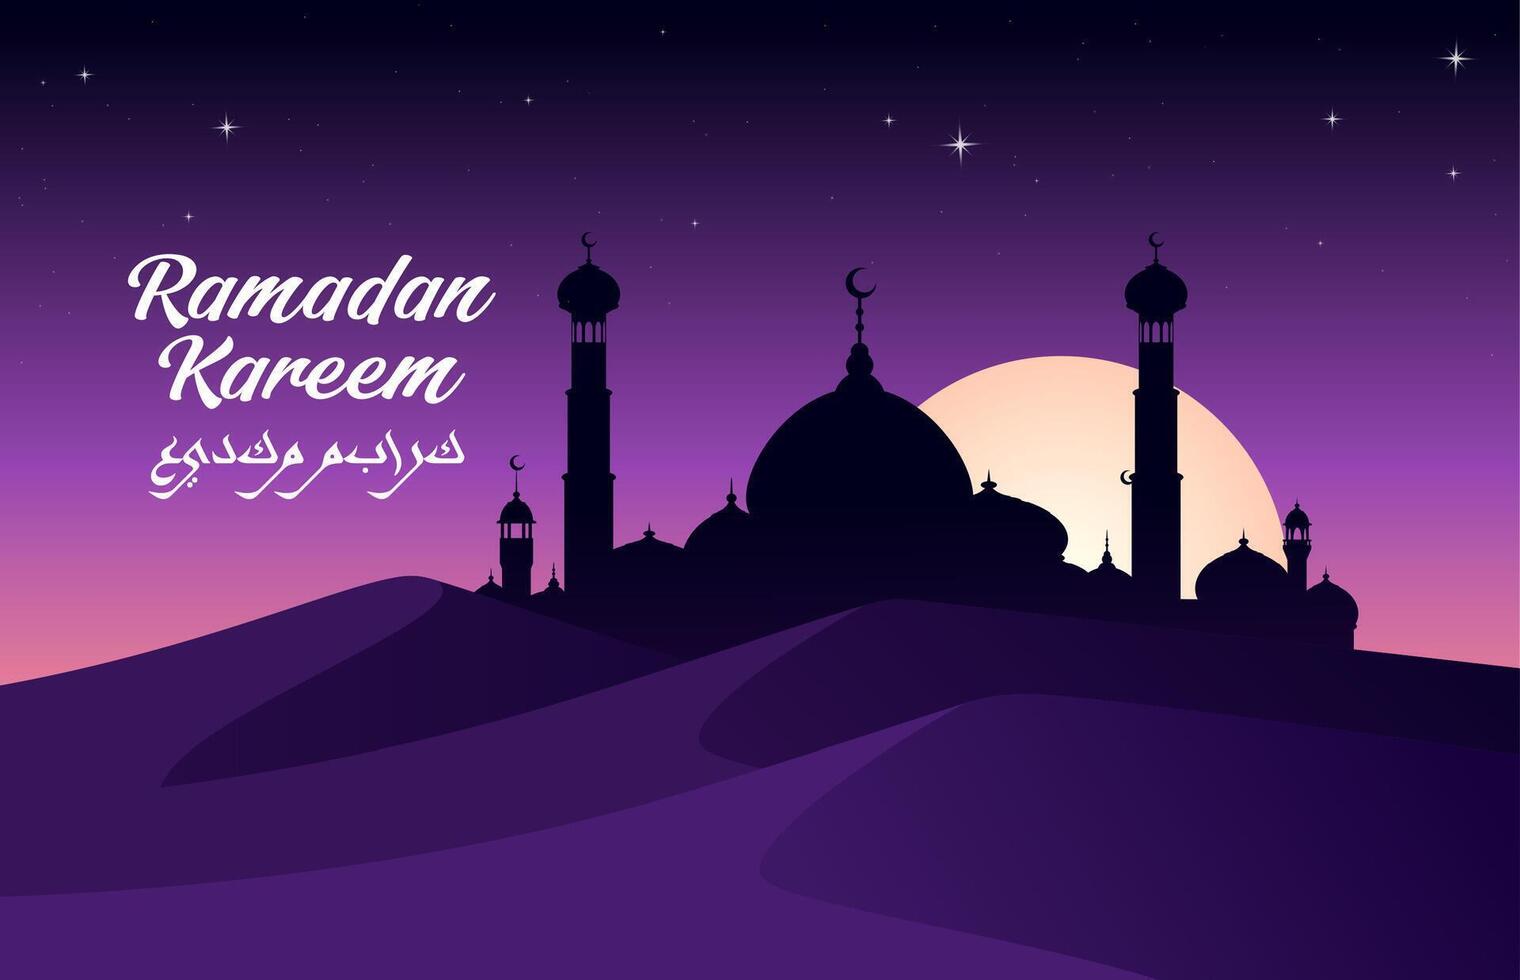 Ramadan Kareem poster with Arabian city and mosque vector